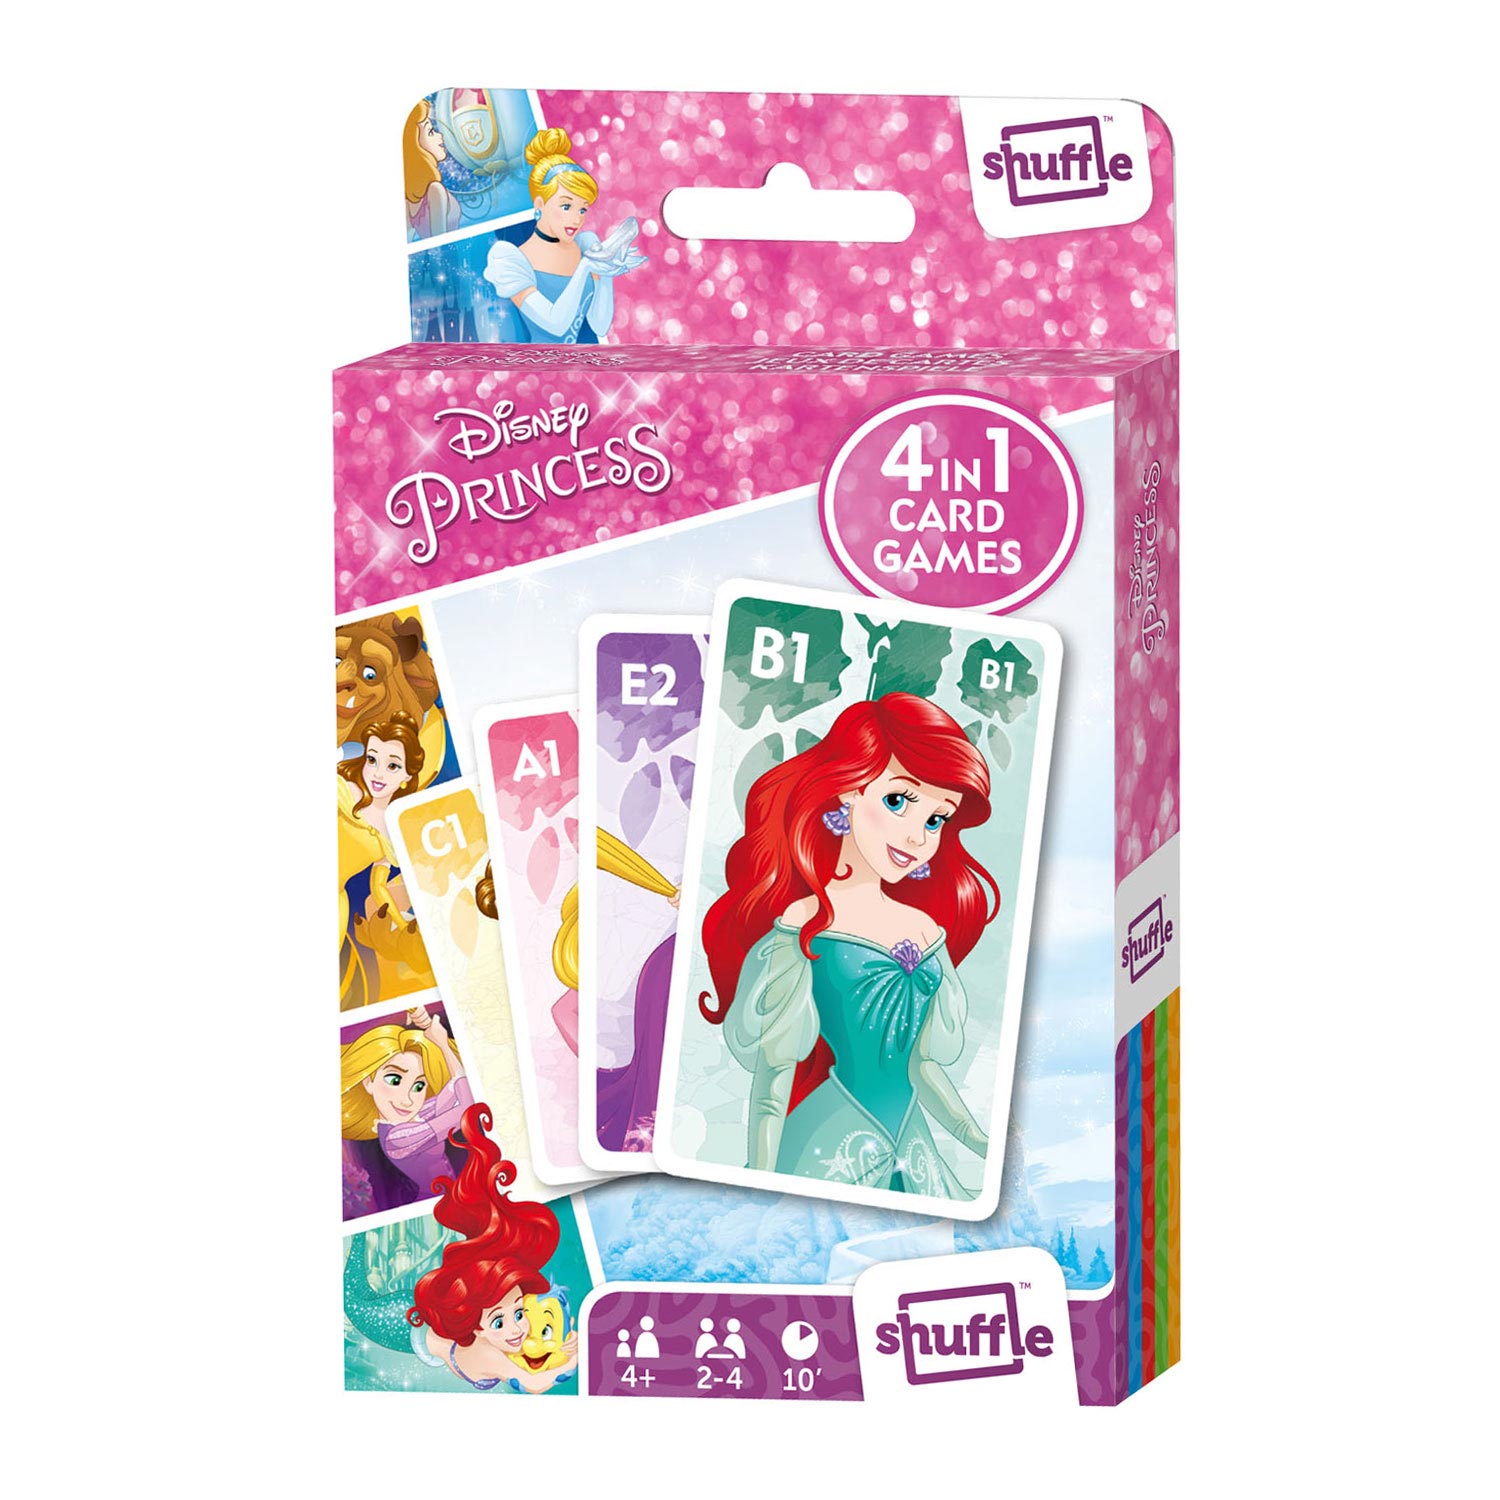 Keizer Voorafgaan schattig Dinsney Princess 4in1 Shuffle Card game | Thimble Toys